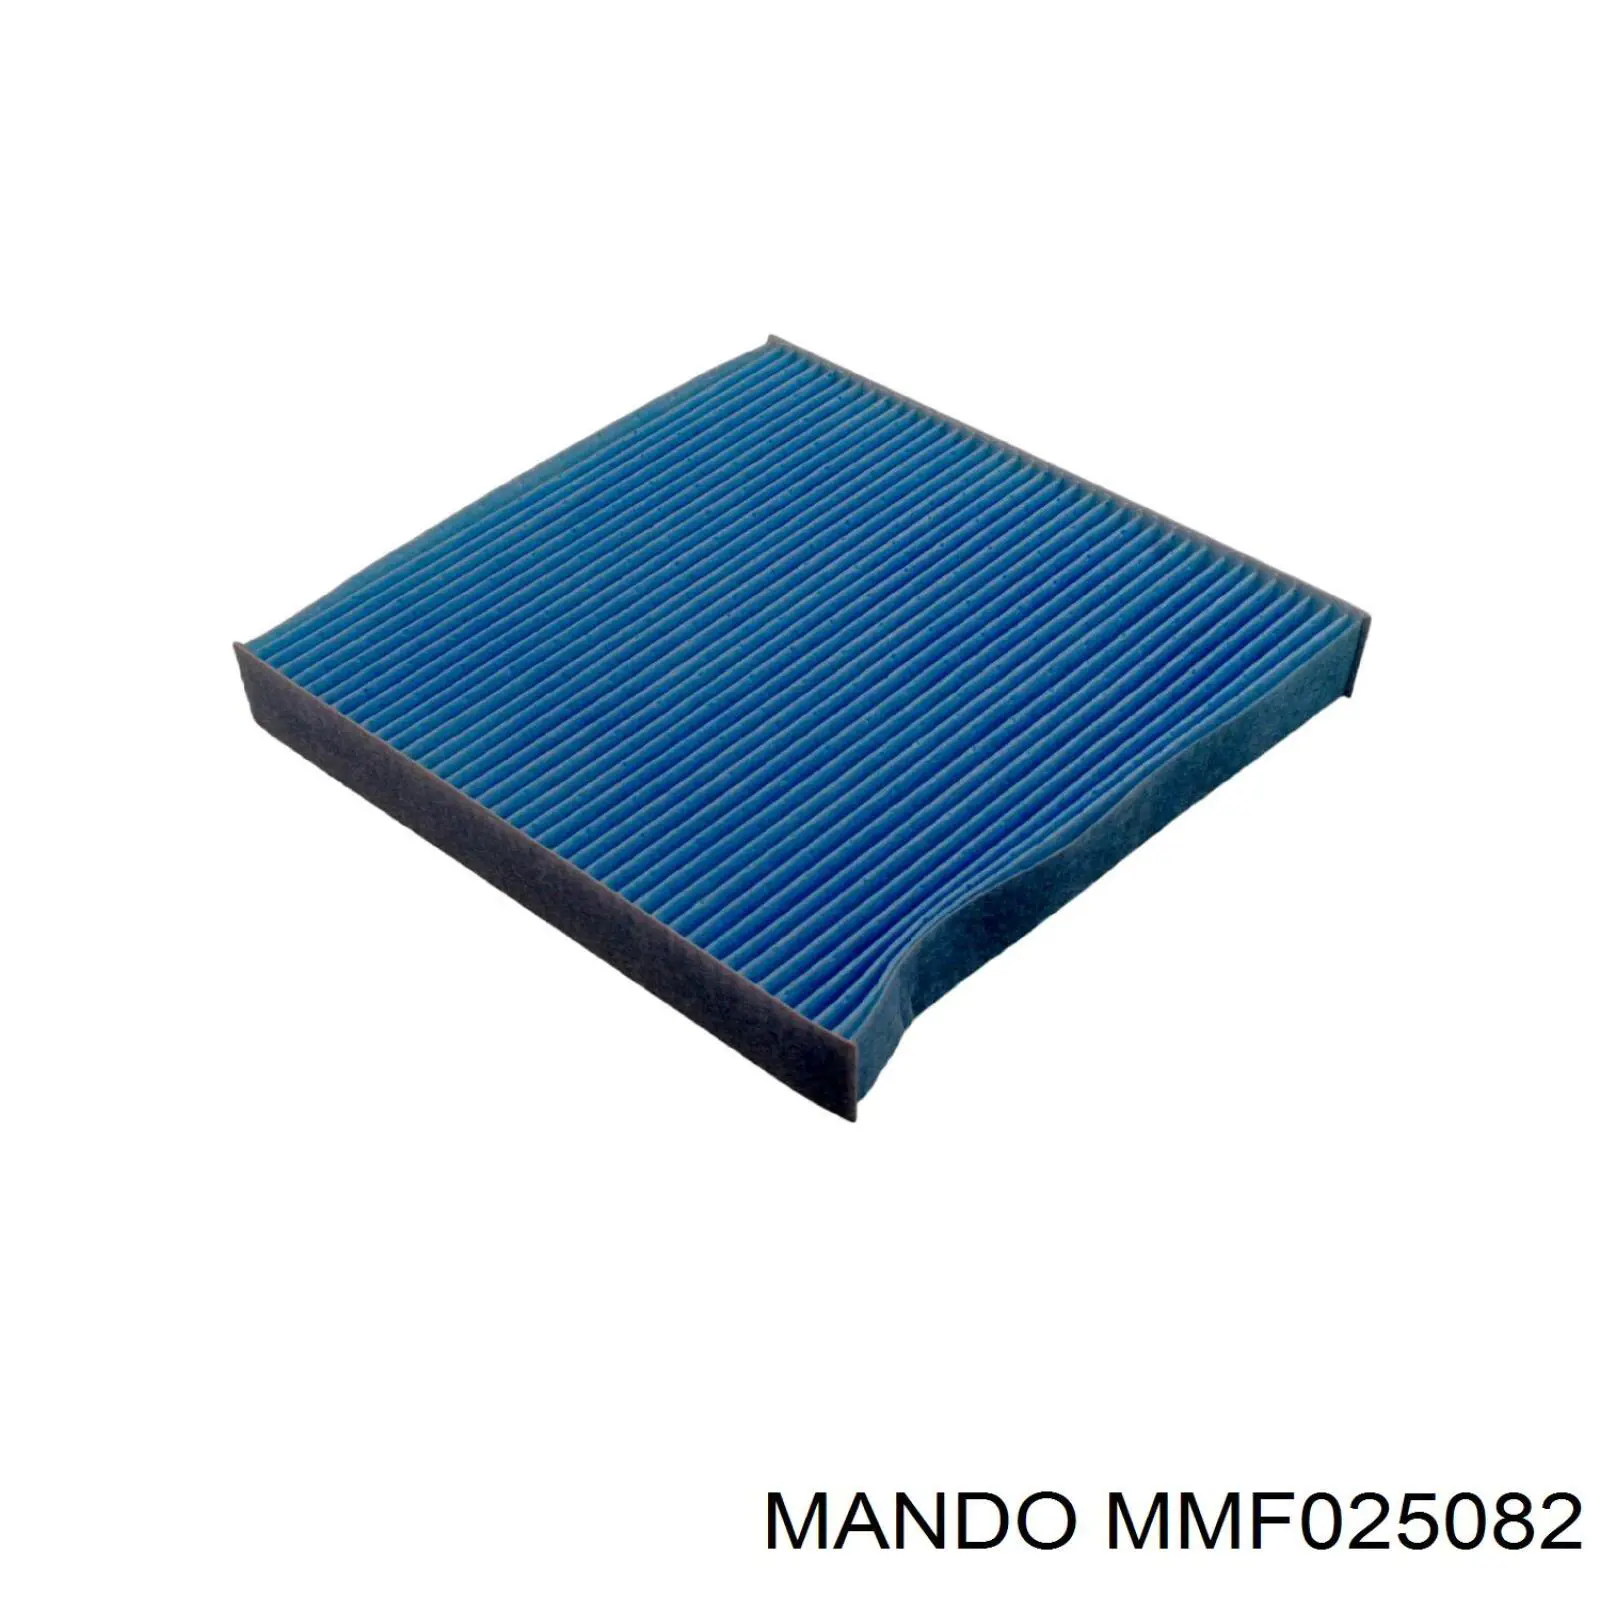 MMF025082 Mando фільтр салону